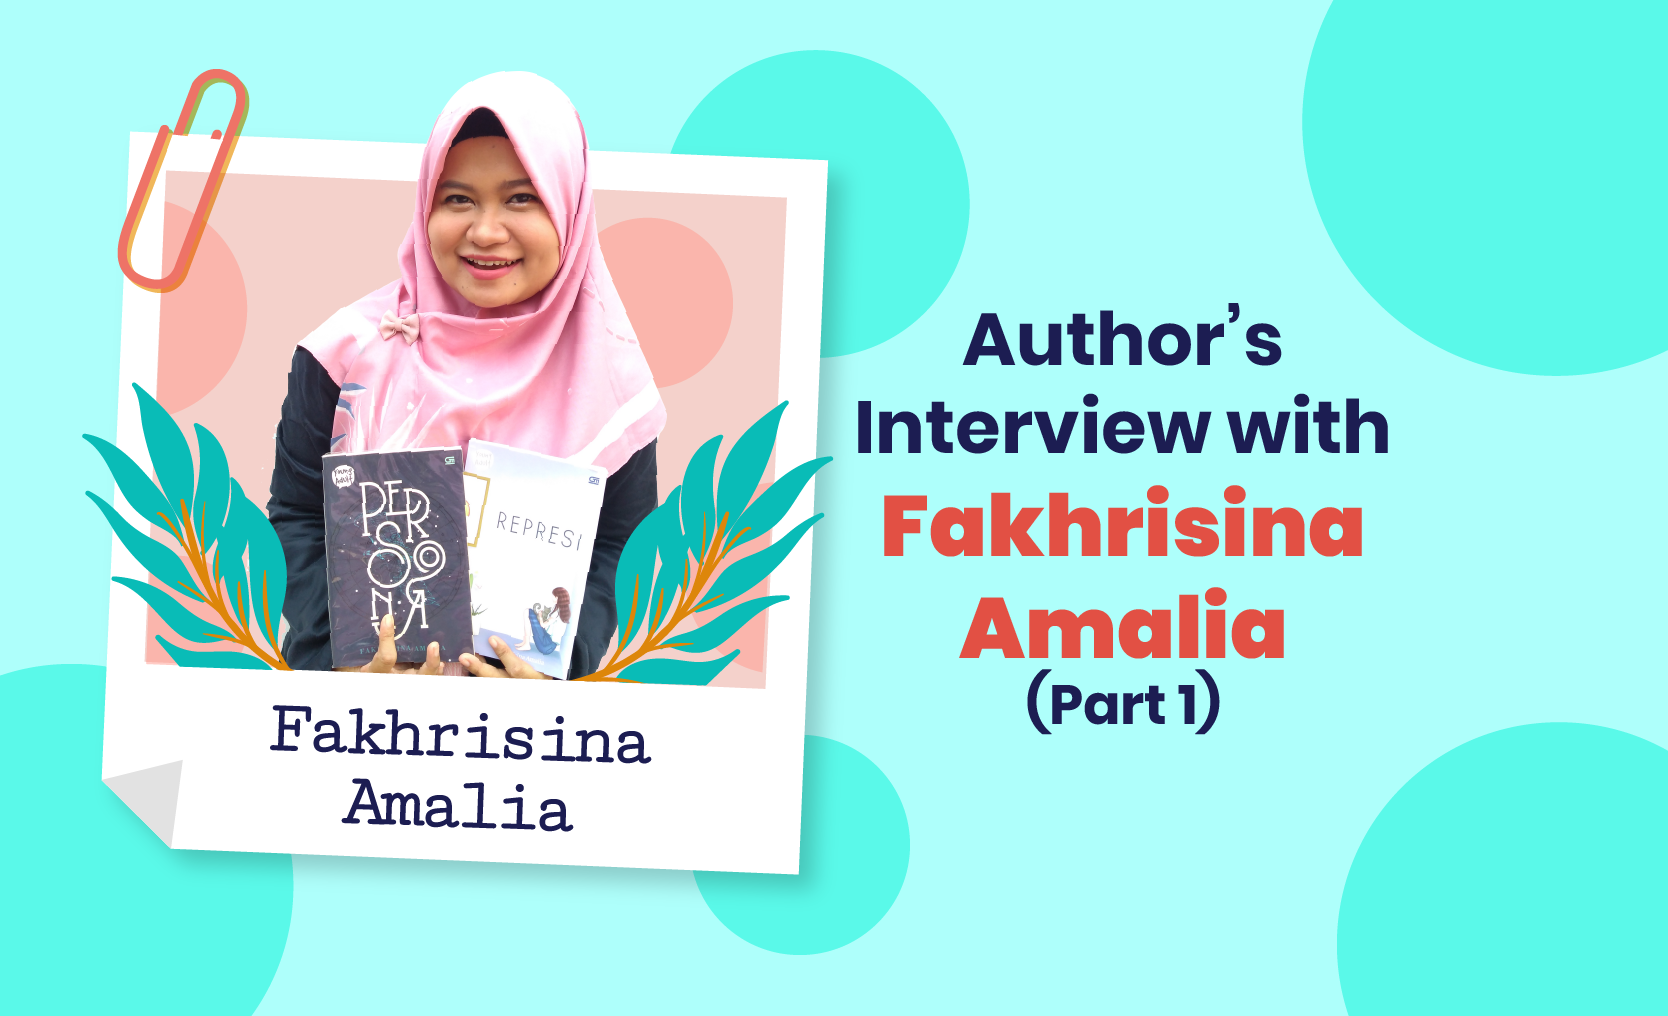 (Author’s Interview) Fakhrisina Amalia: Karena Jarang, Jadi Penting